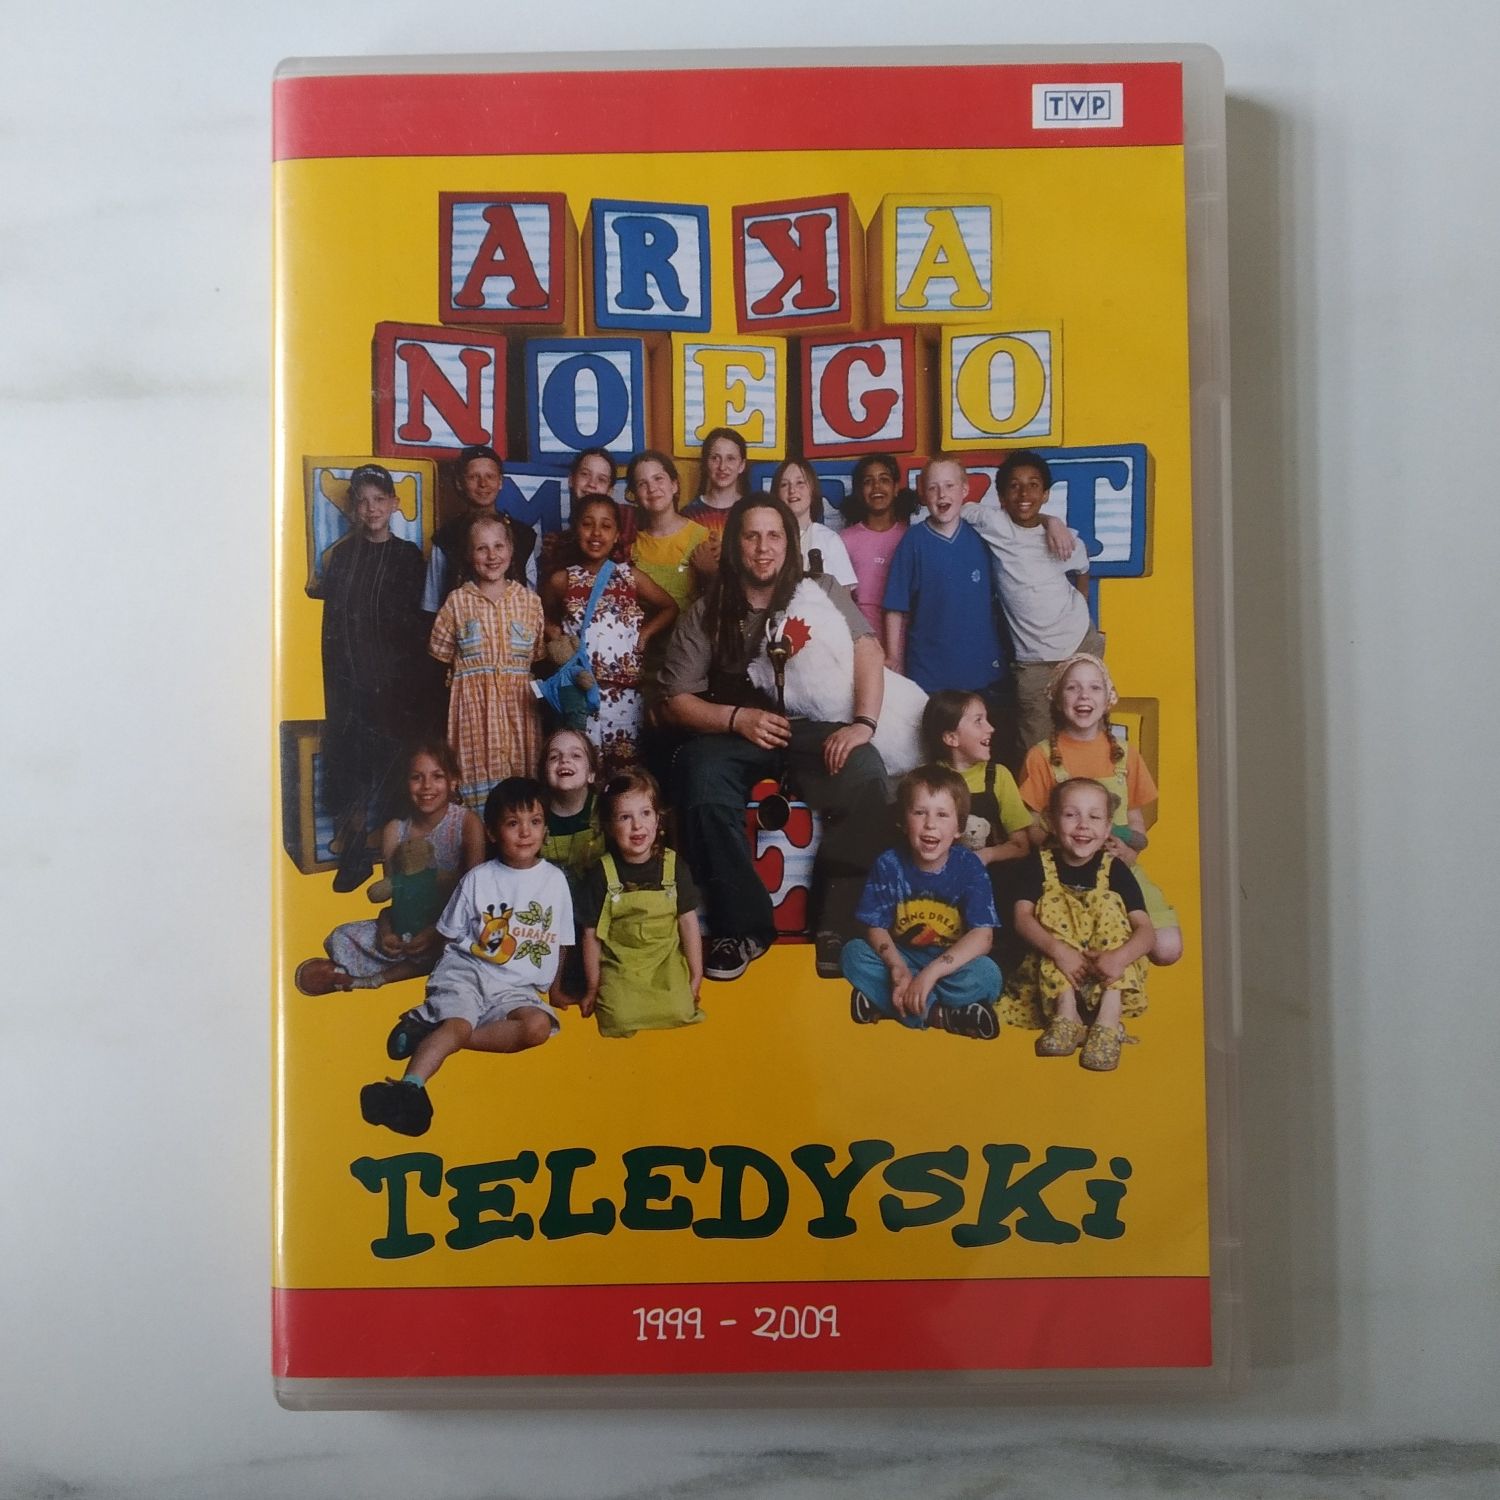 Arka Noego teledyski  1999 - 2009 DVD Litza Maleo